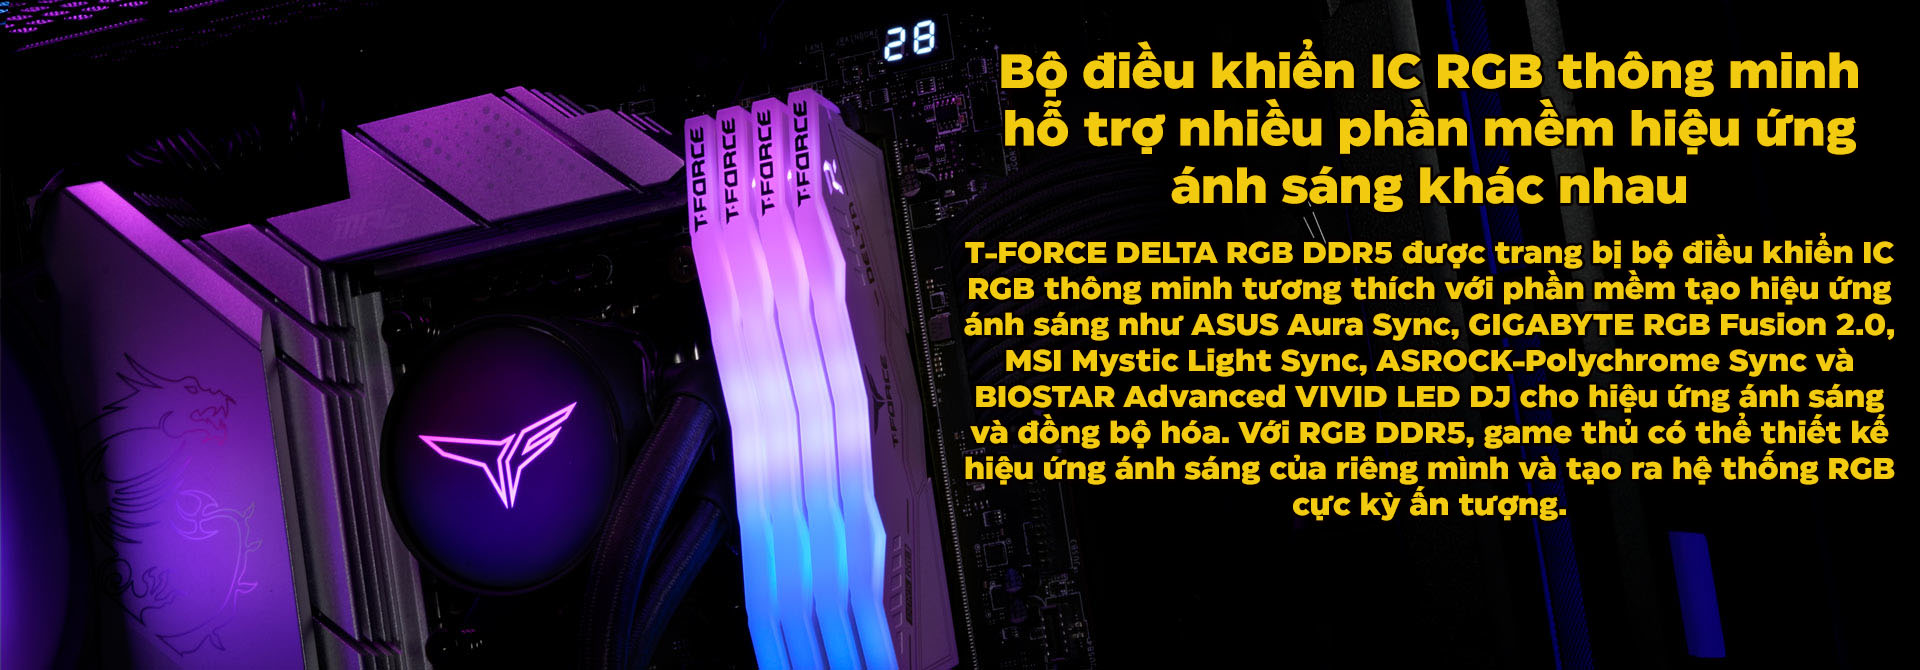 RAM Desktop TEAMGROUP DELTA RGB DDR5